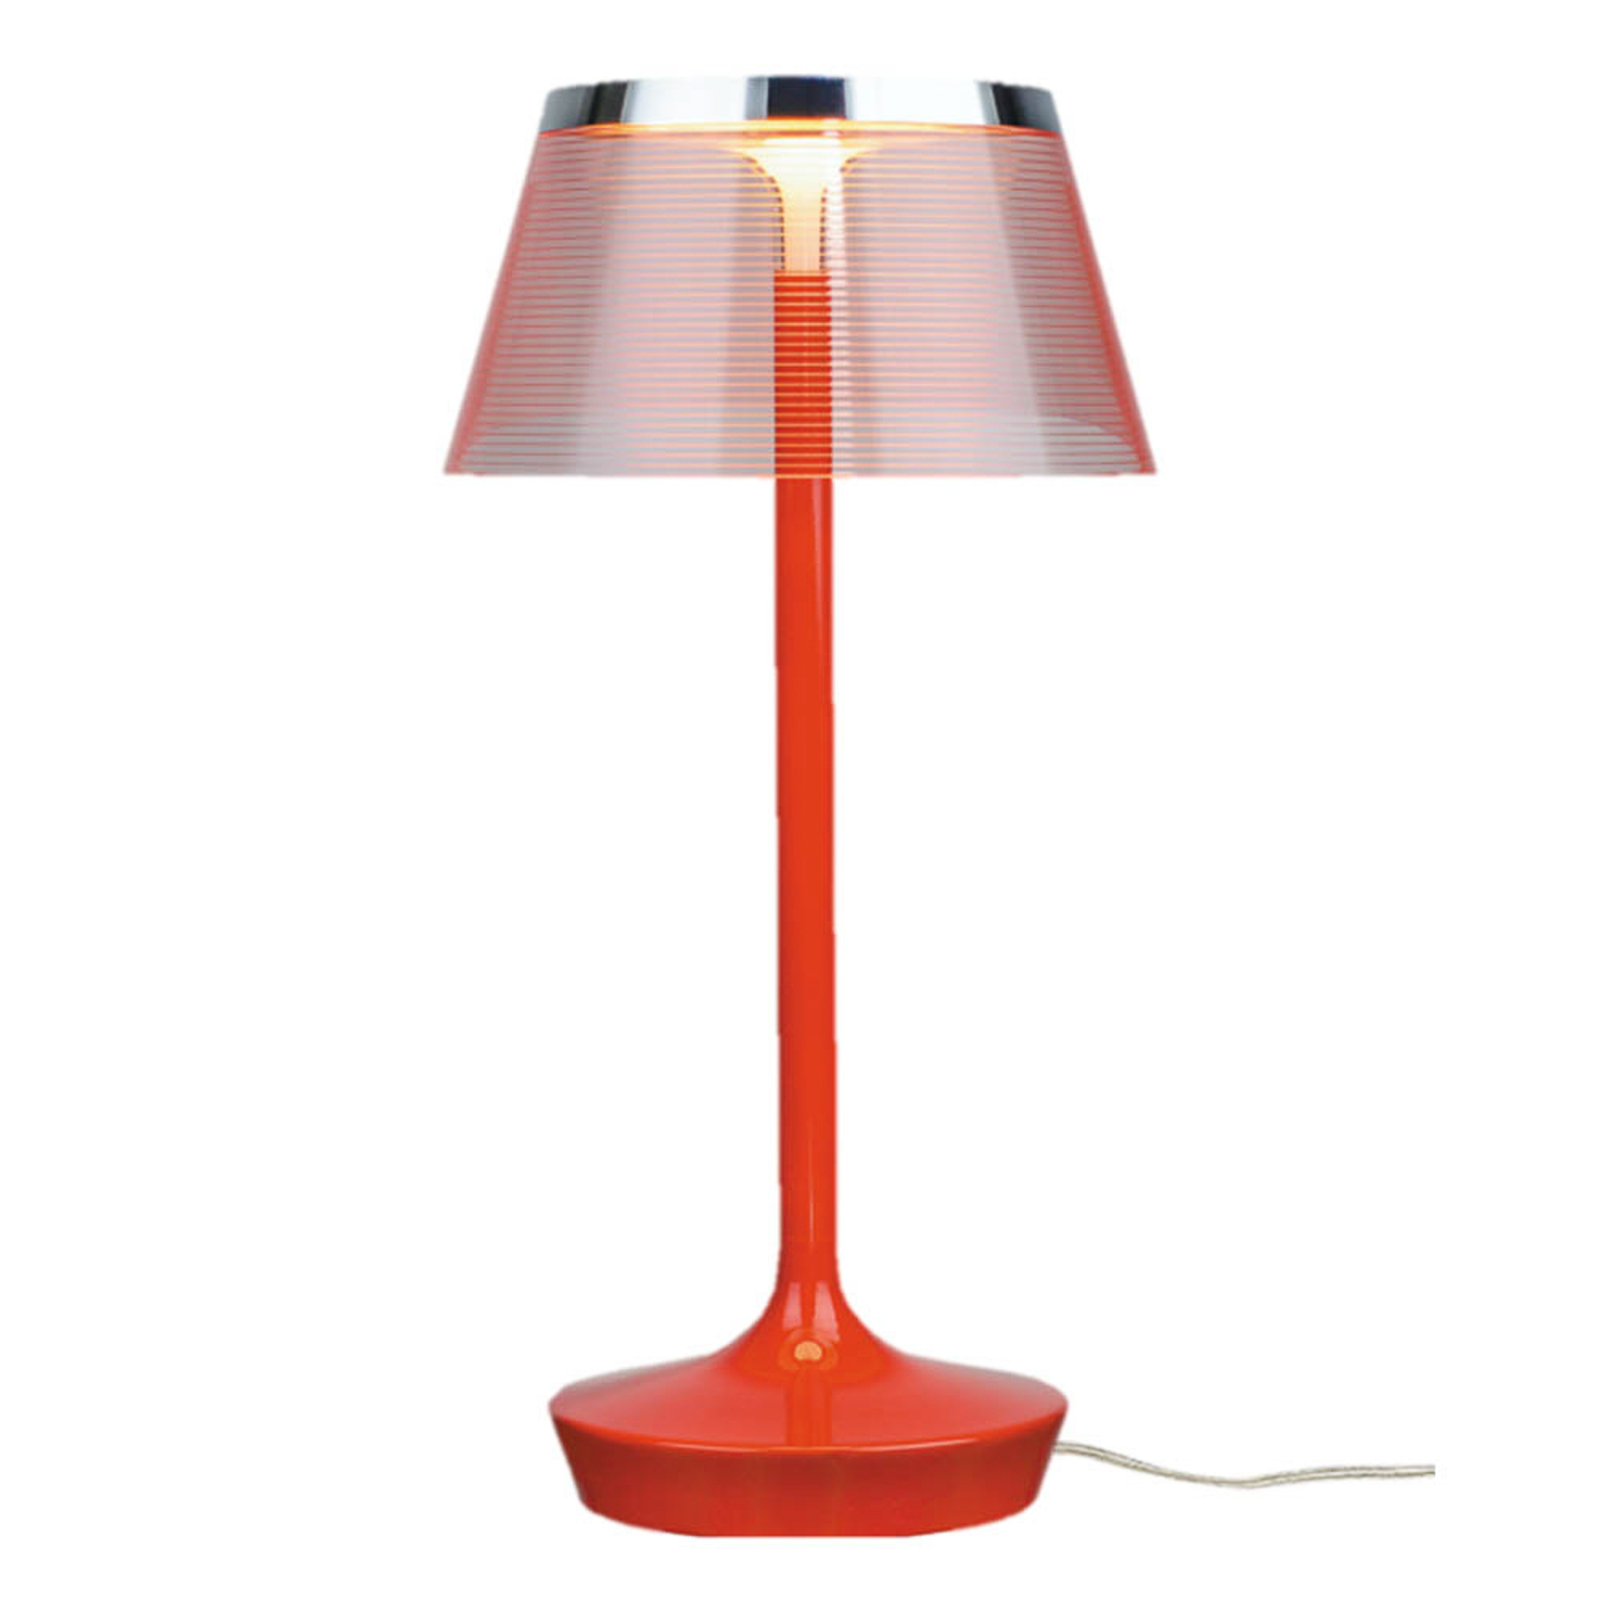 Aluminor La Petite Lampe lampa stołowa, czerwona